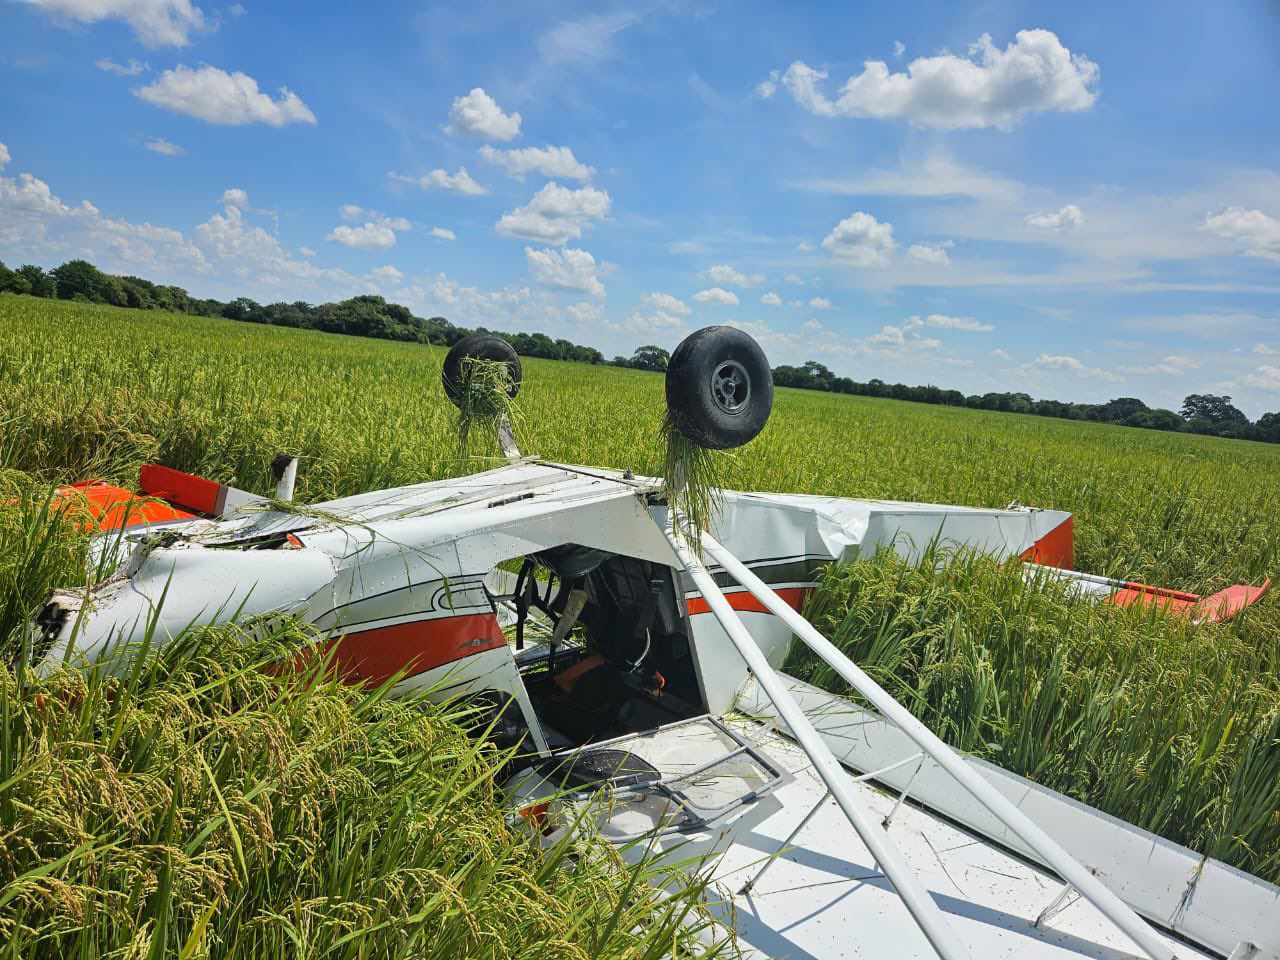 Avioneta accidentada en Yopal